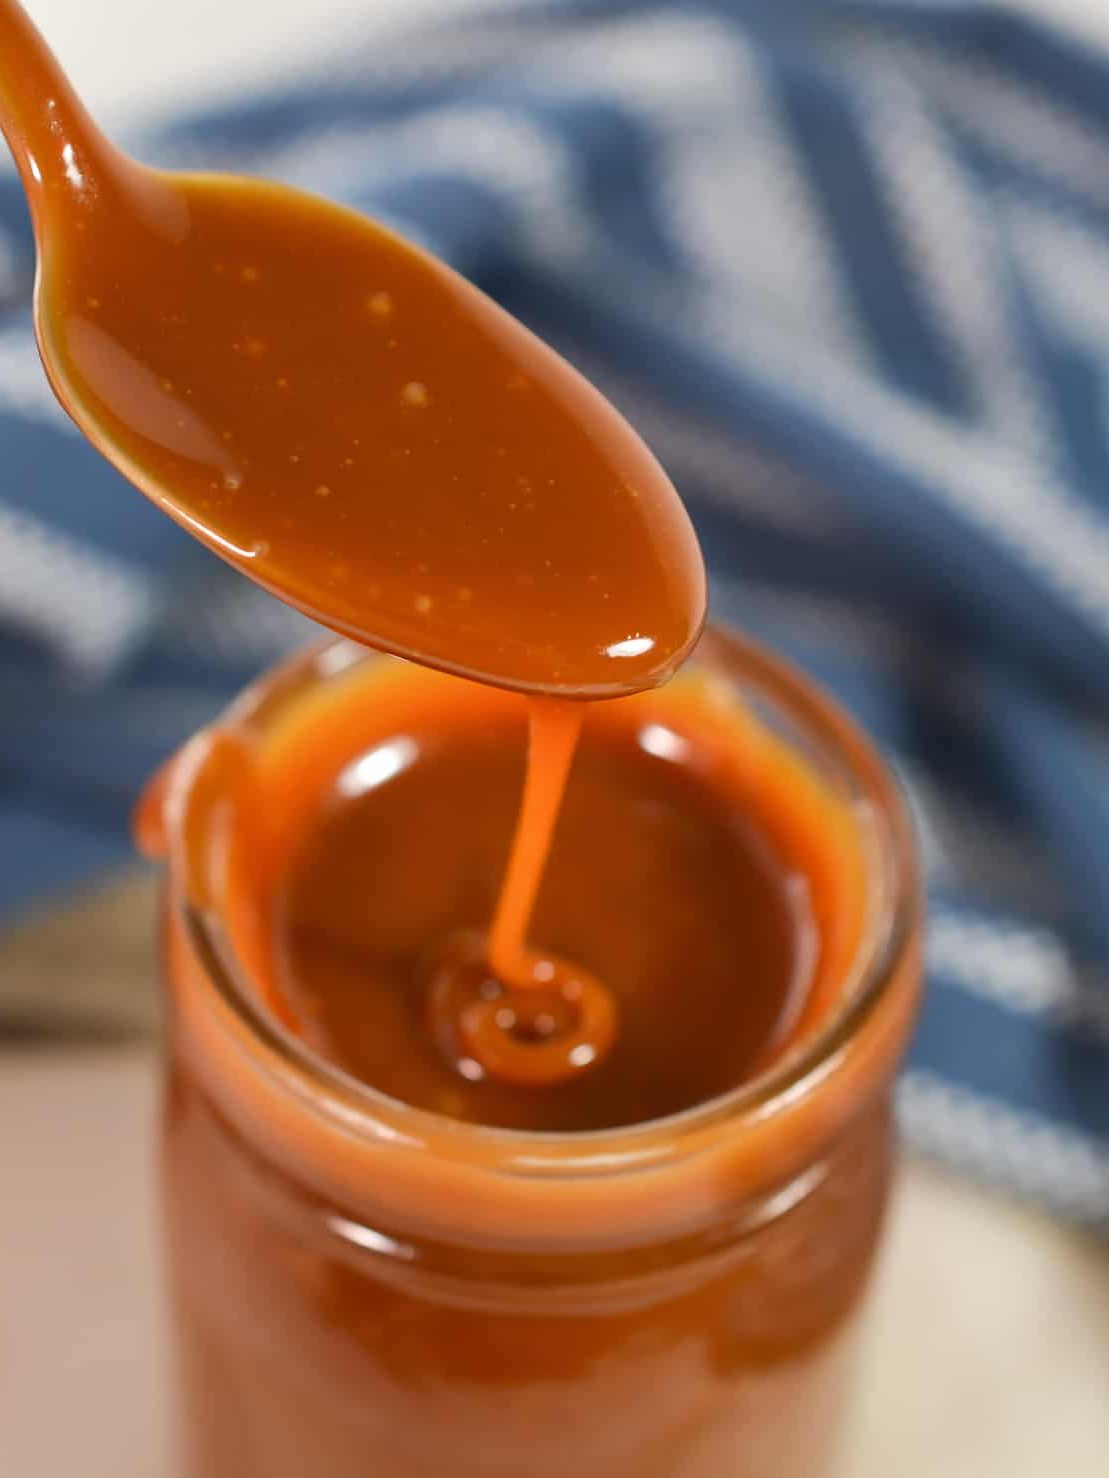 Amazing Caramel Sauce